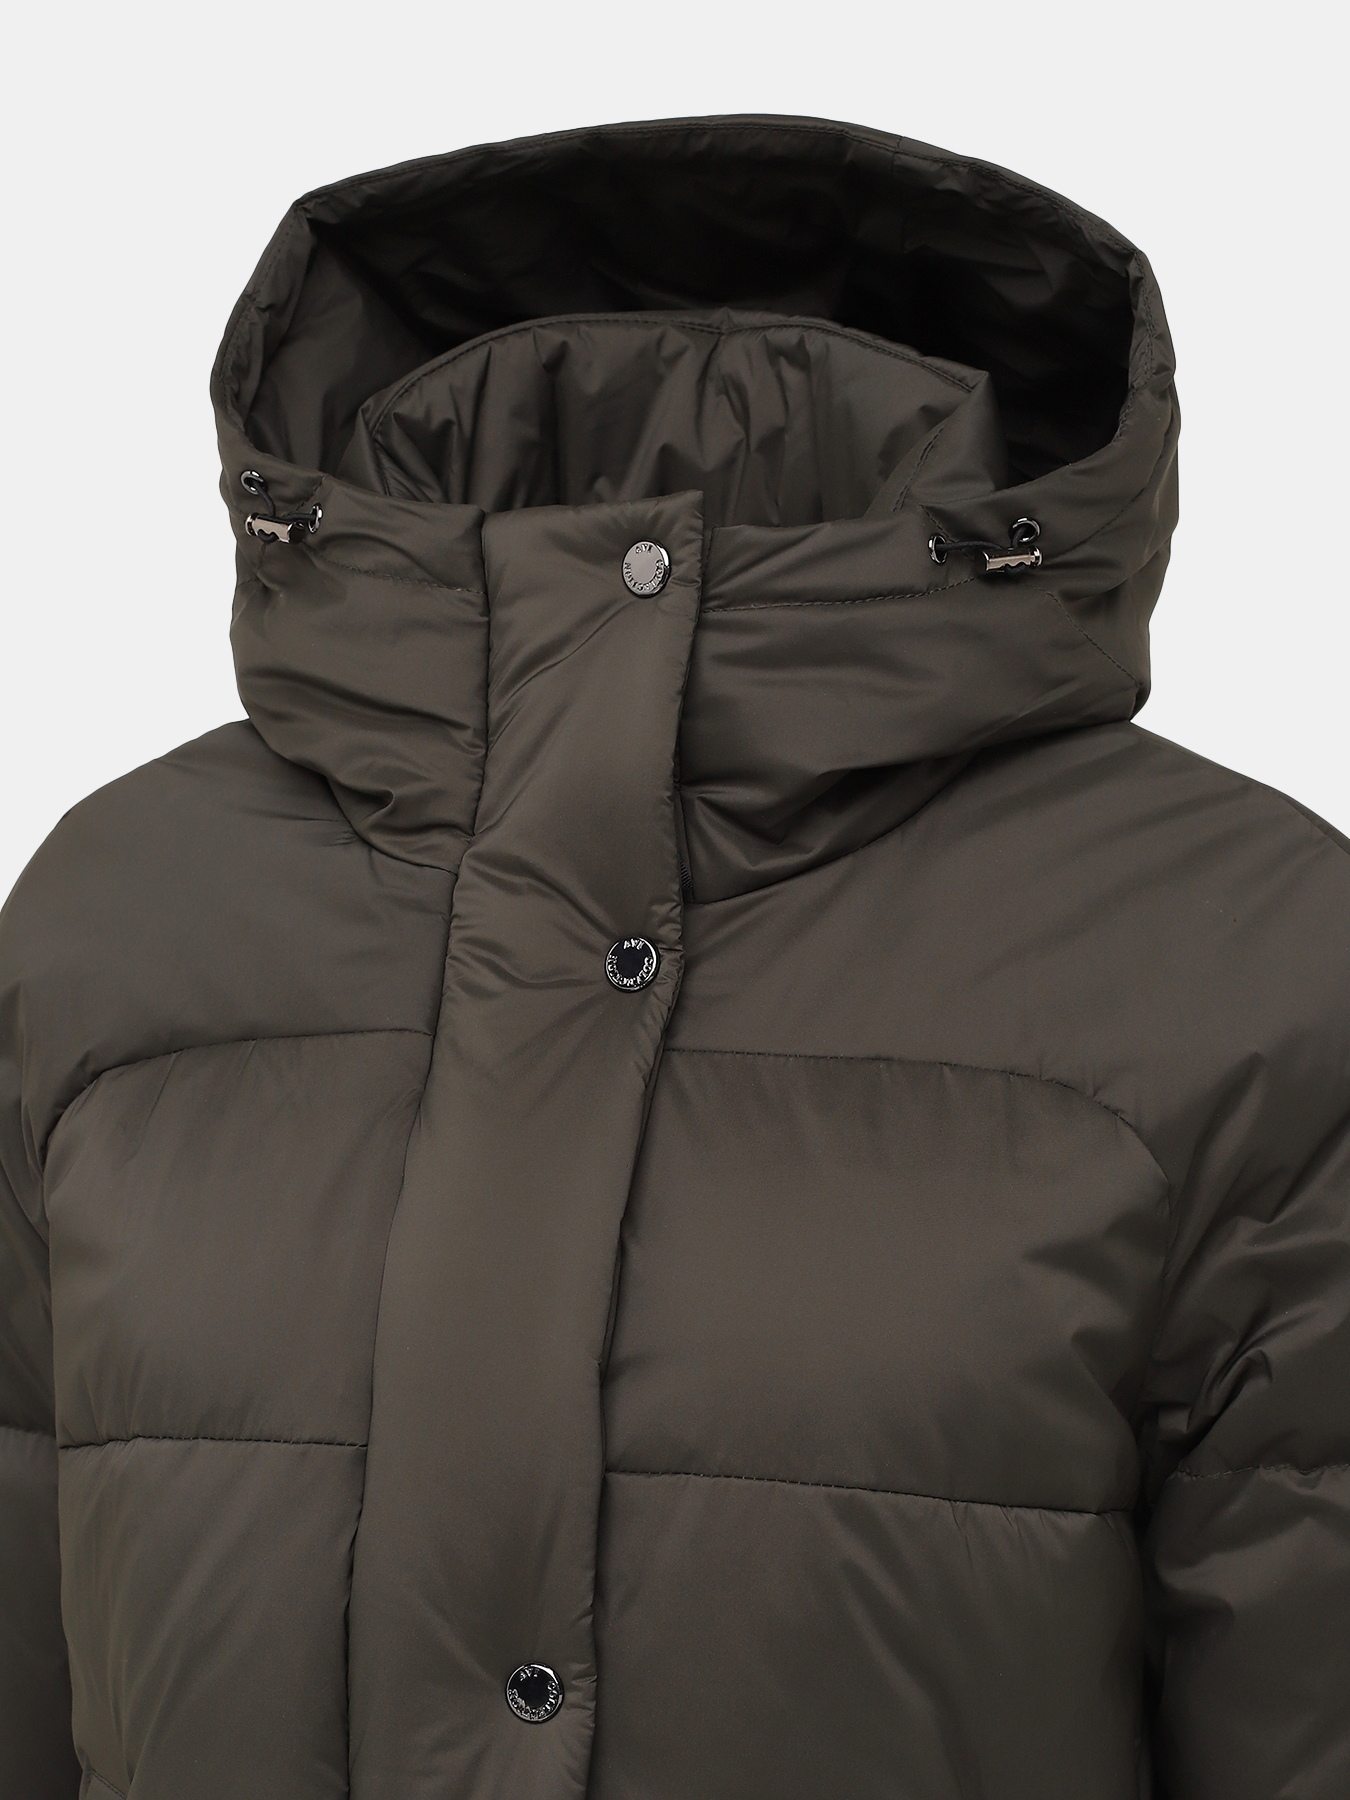 Пальто зимнее AVI 433638-023, цвет хаки, размер 50 - фото 2